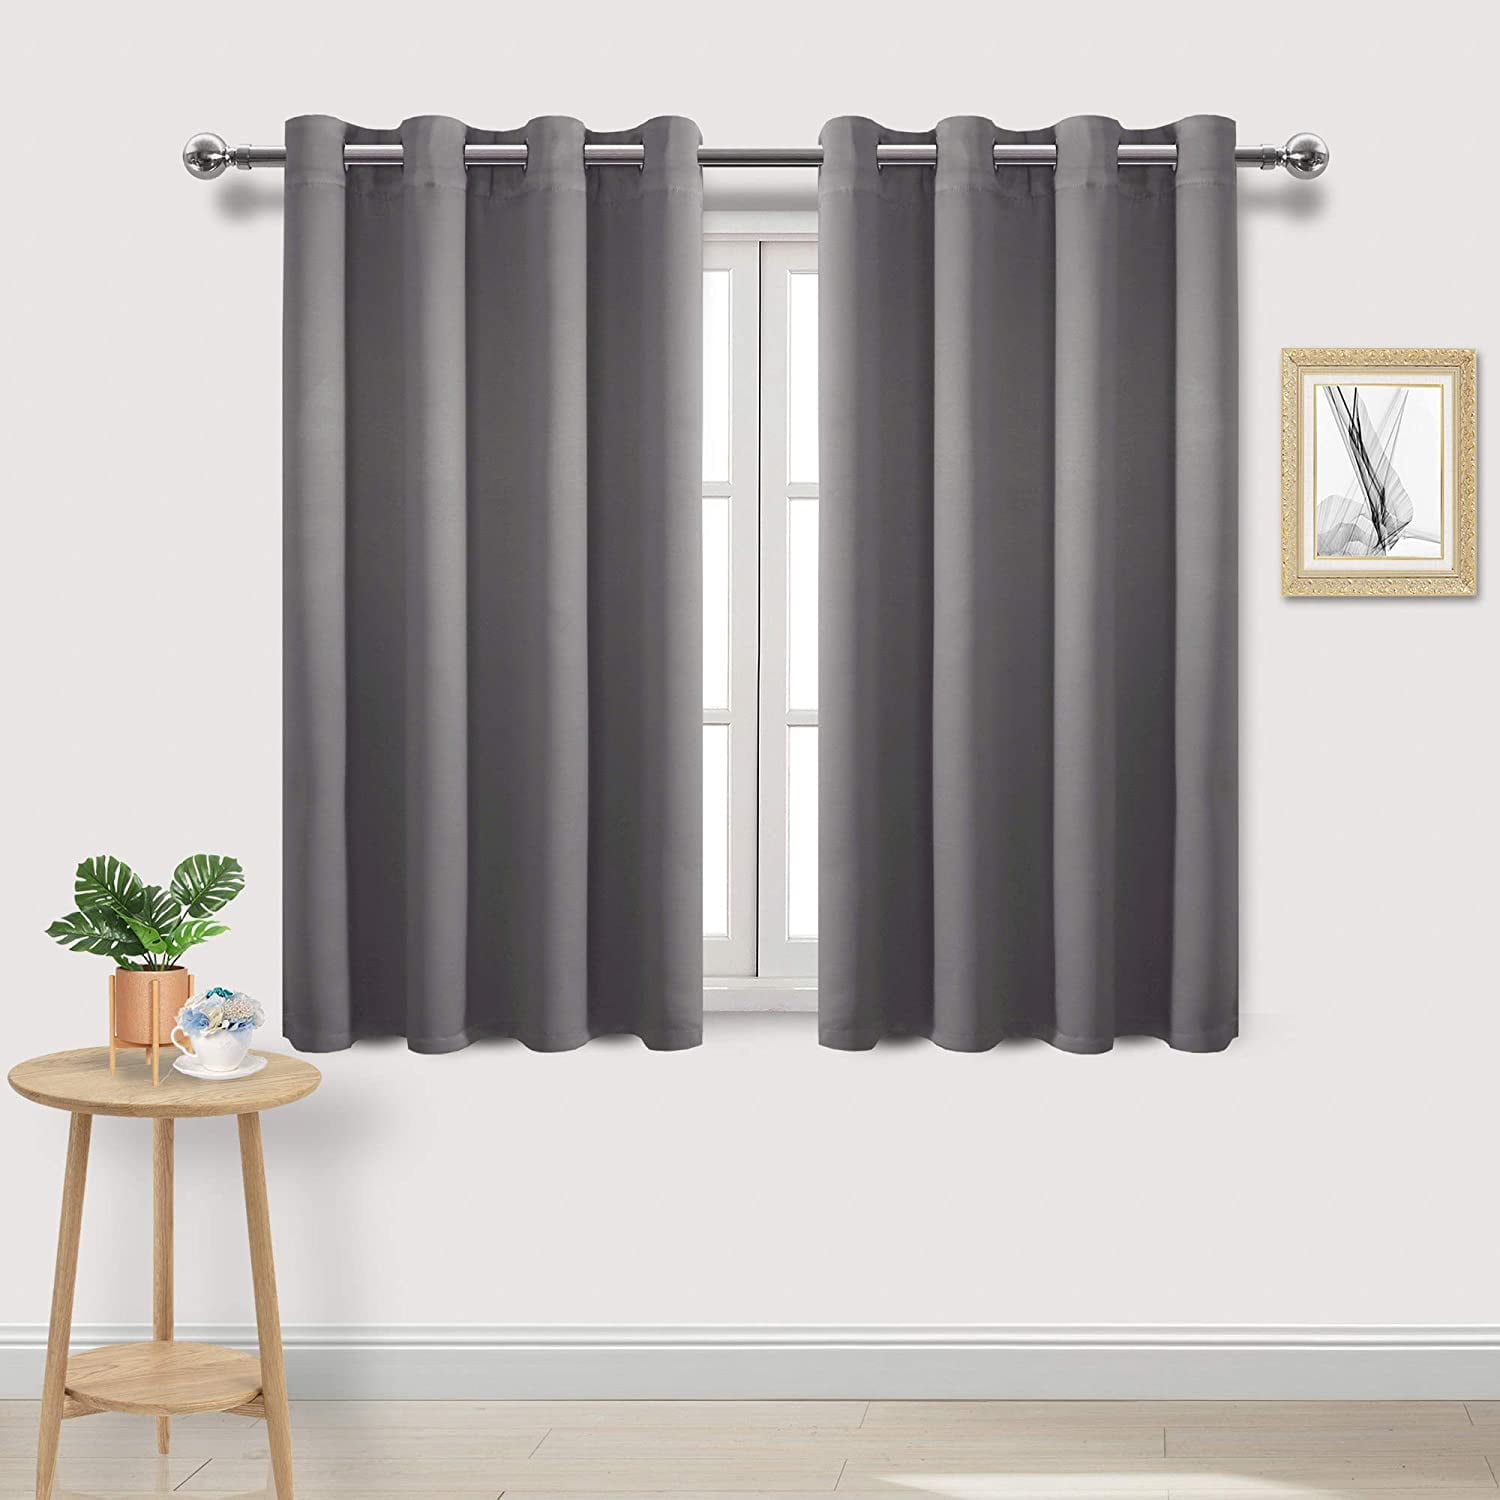 Bedroom Grommet Window Curtain Panel 42, Light Grey Curtains Bedroom